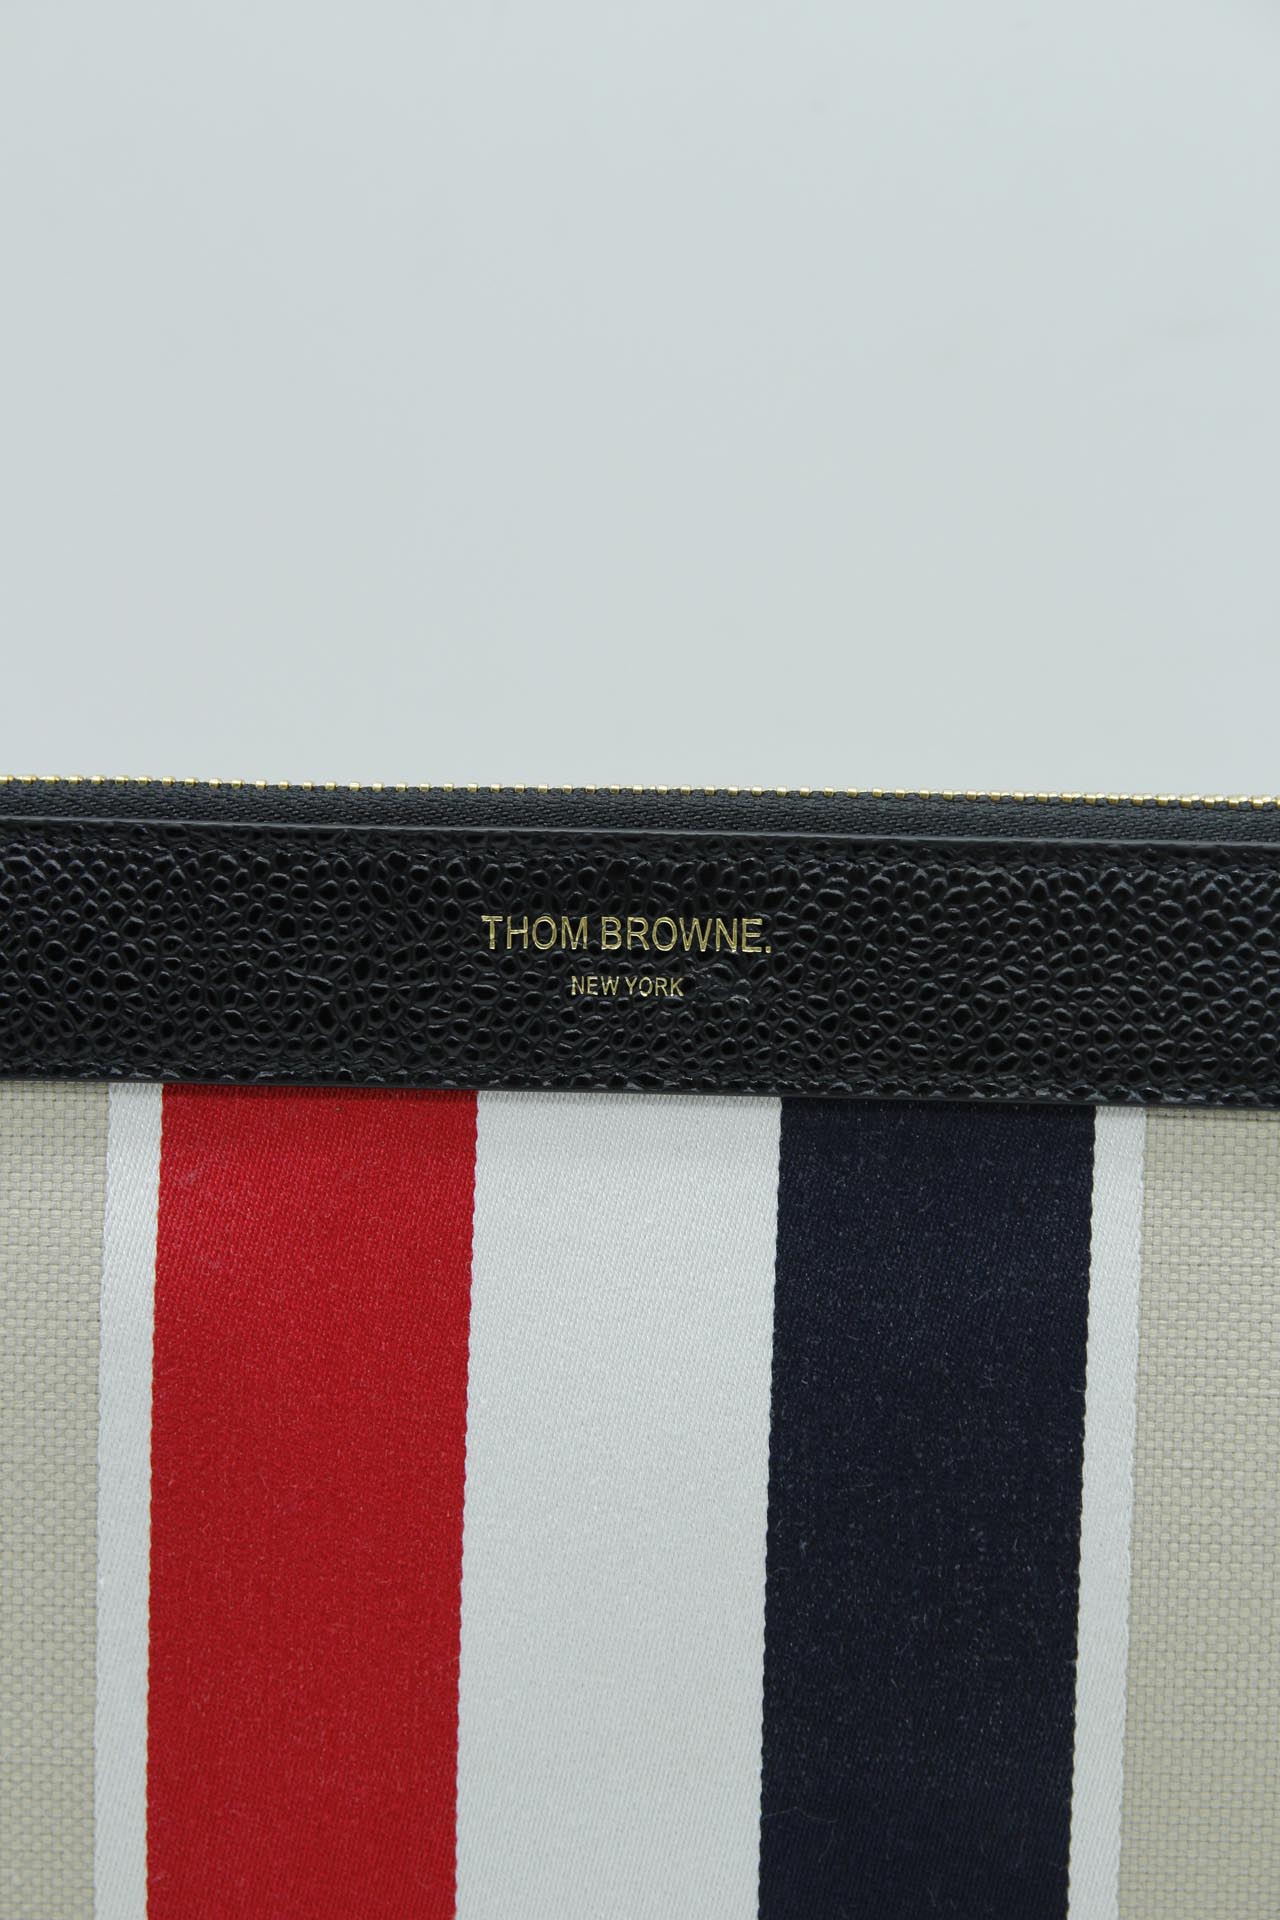 Thom Browne, 